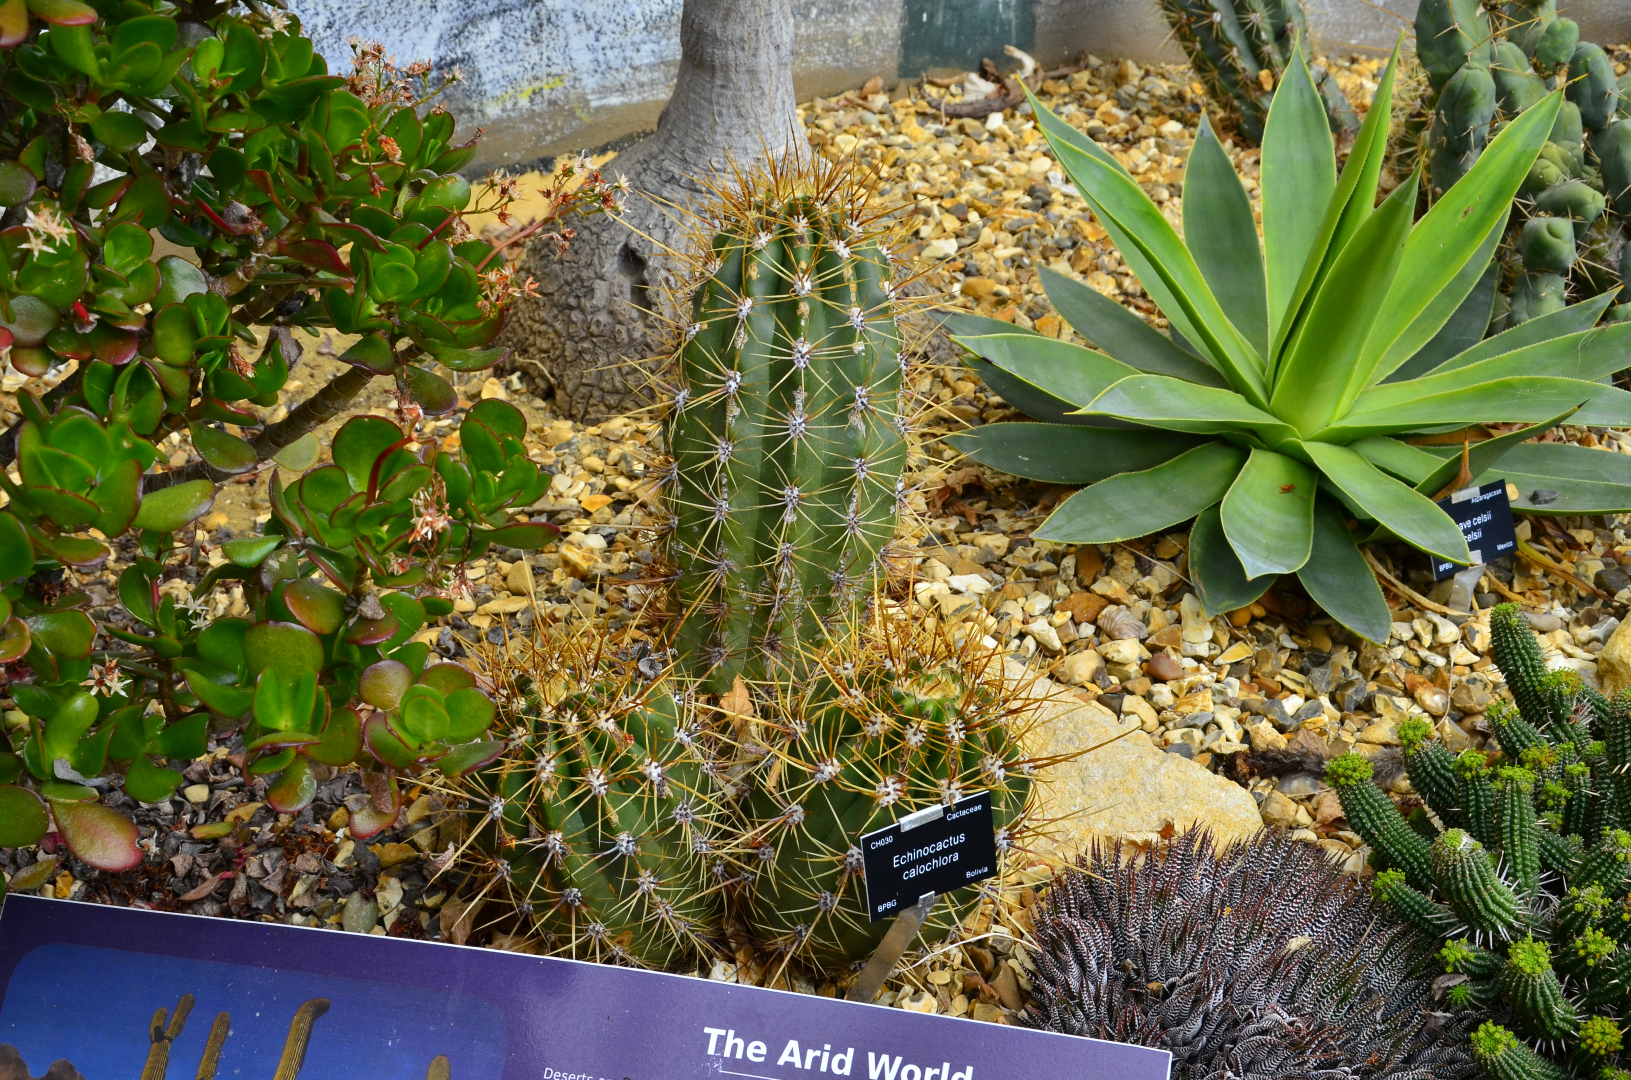 Photograph of cactus